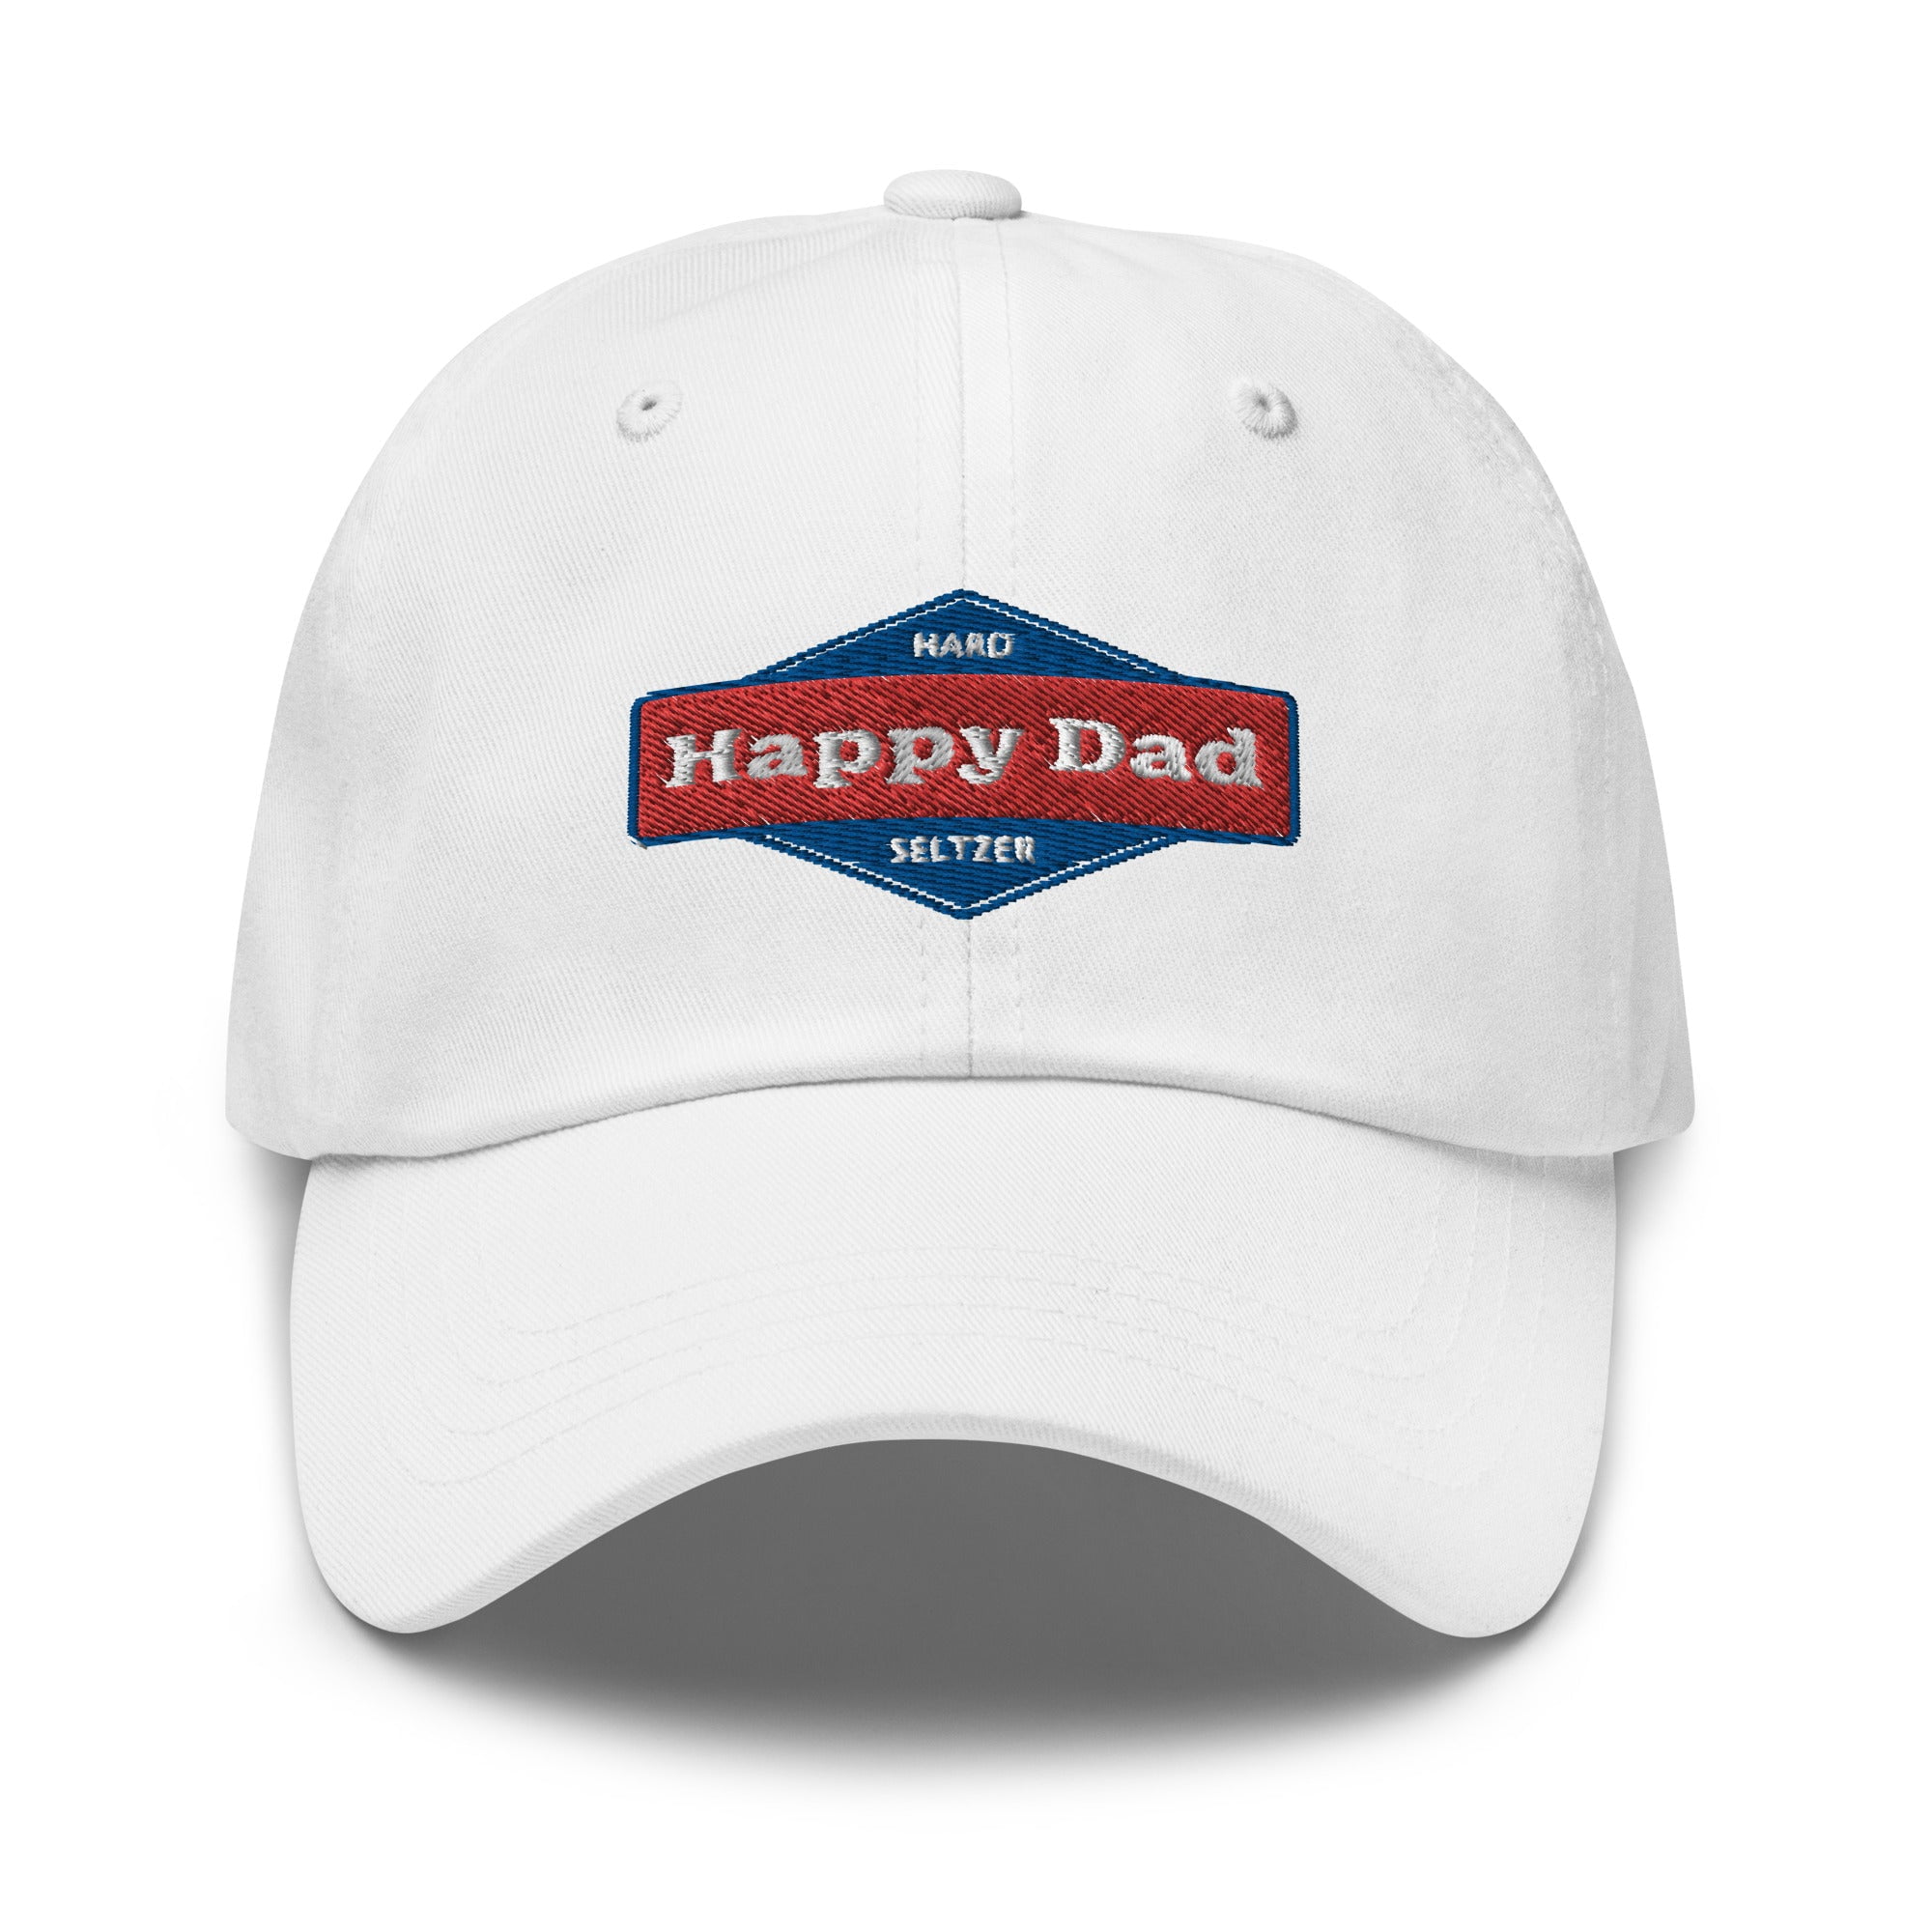 Happy Dad Seltzer Hat, Happy Dad Nelk Merch Cap - Walmart.com